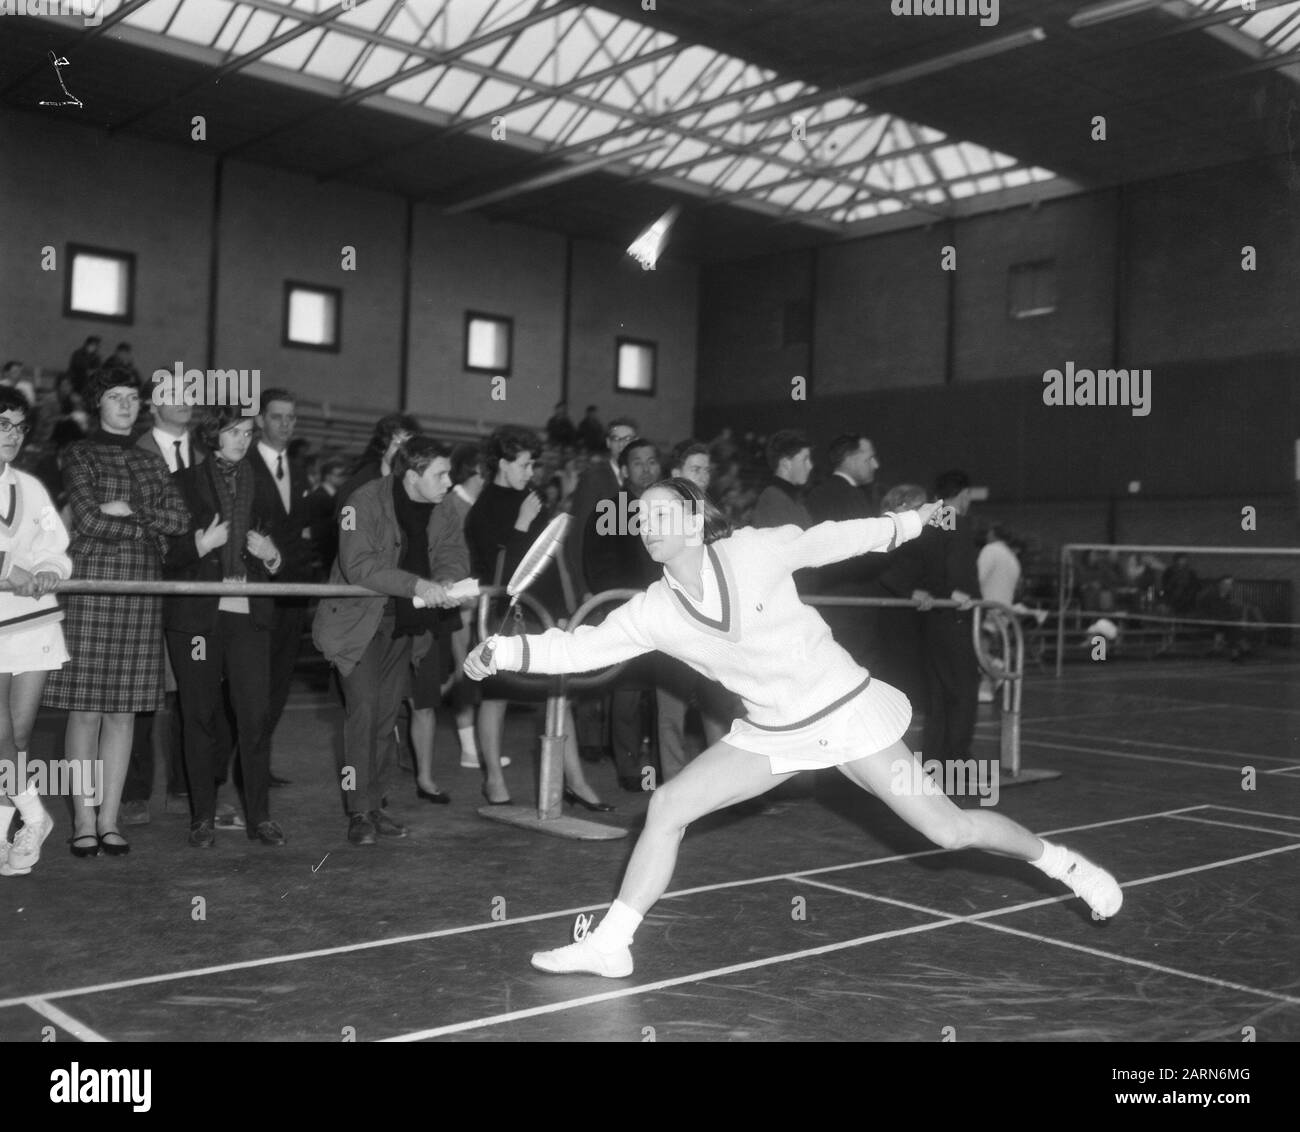 International badminton championships in Haarlem, Bente Flindt (Denmark)  Date: February 14, 1965 Location: Denmark, Haarlem Keywords: Badminton,  Championships Stock Photo - Alamy